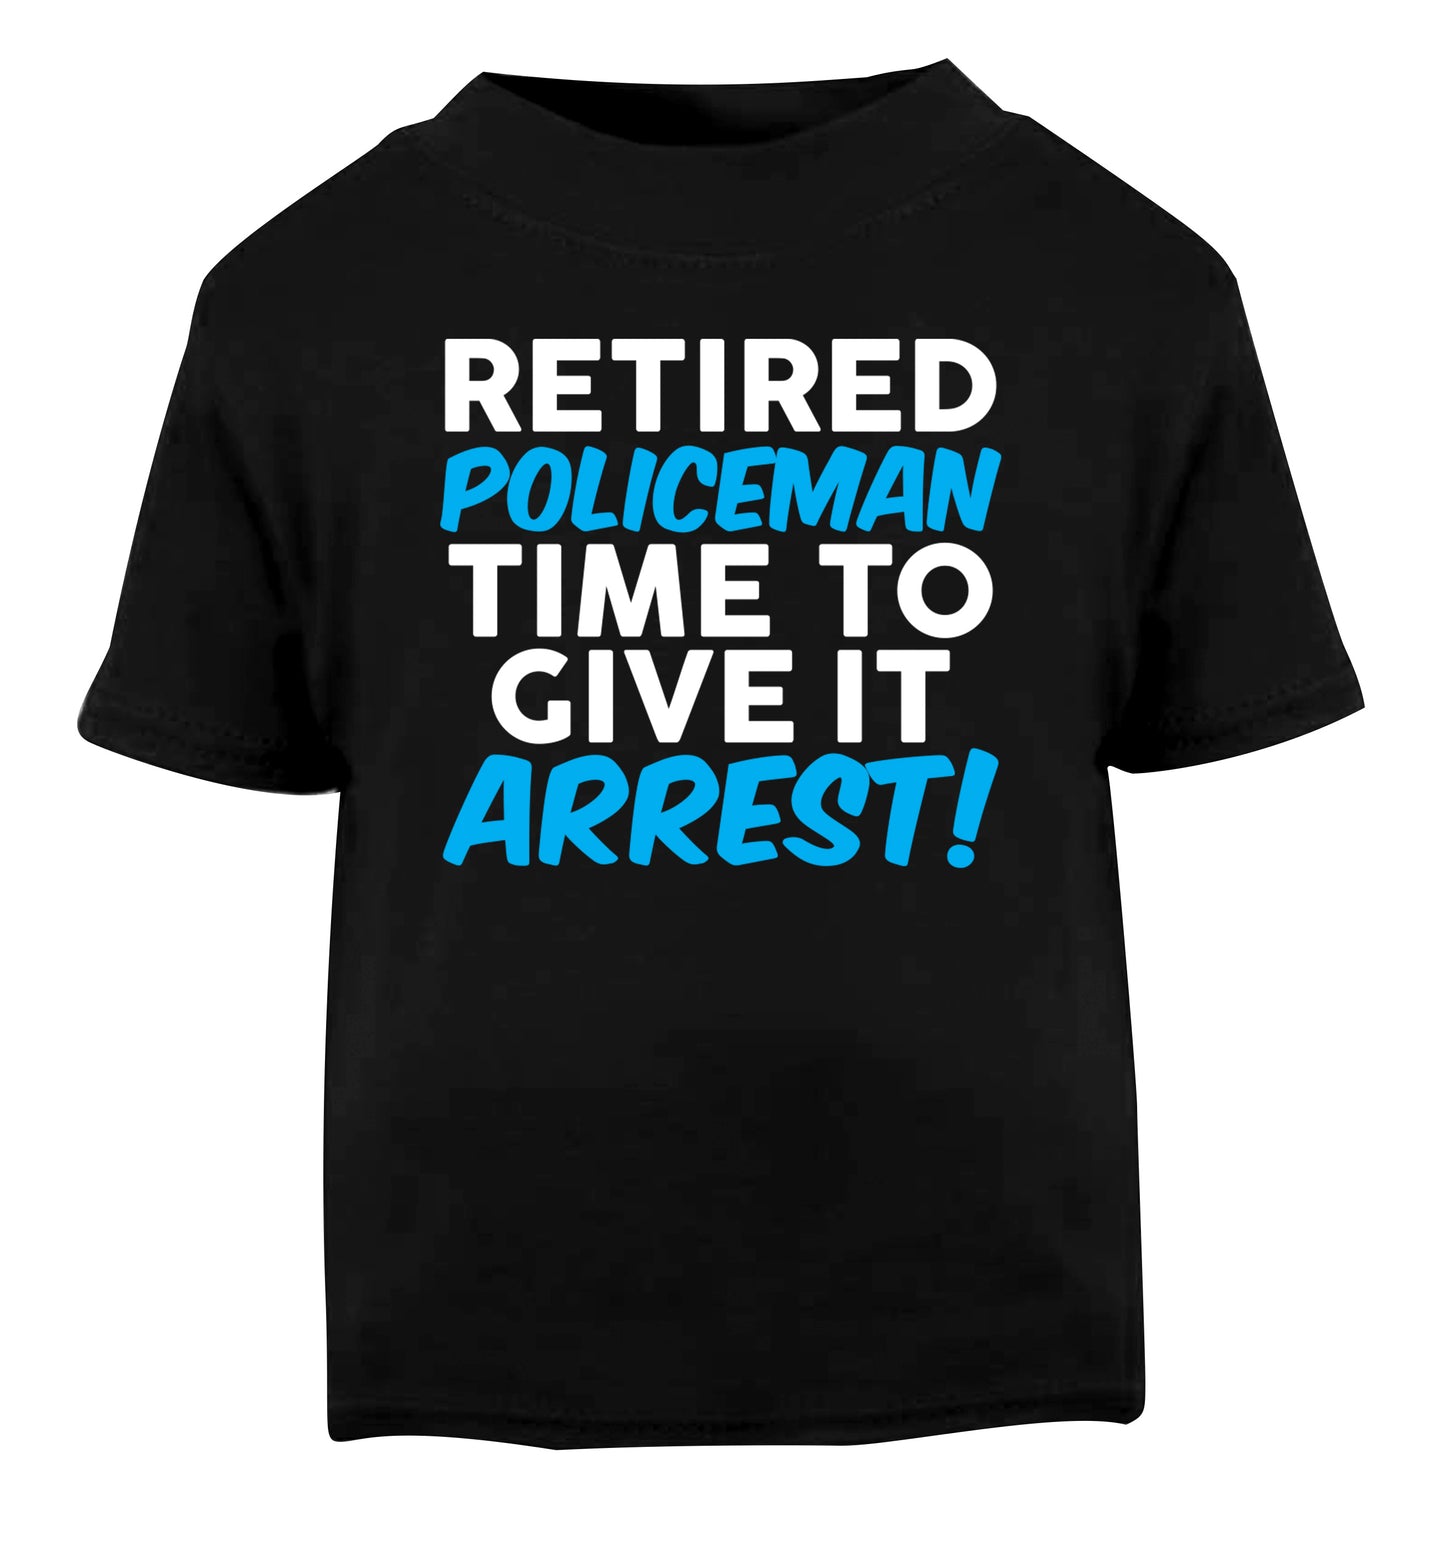 Retired policeman give it arresst! Black Baby Toddler Tshirt 2 years